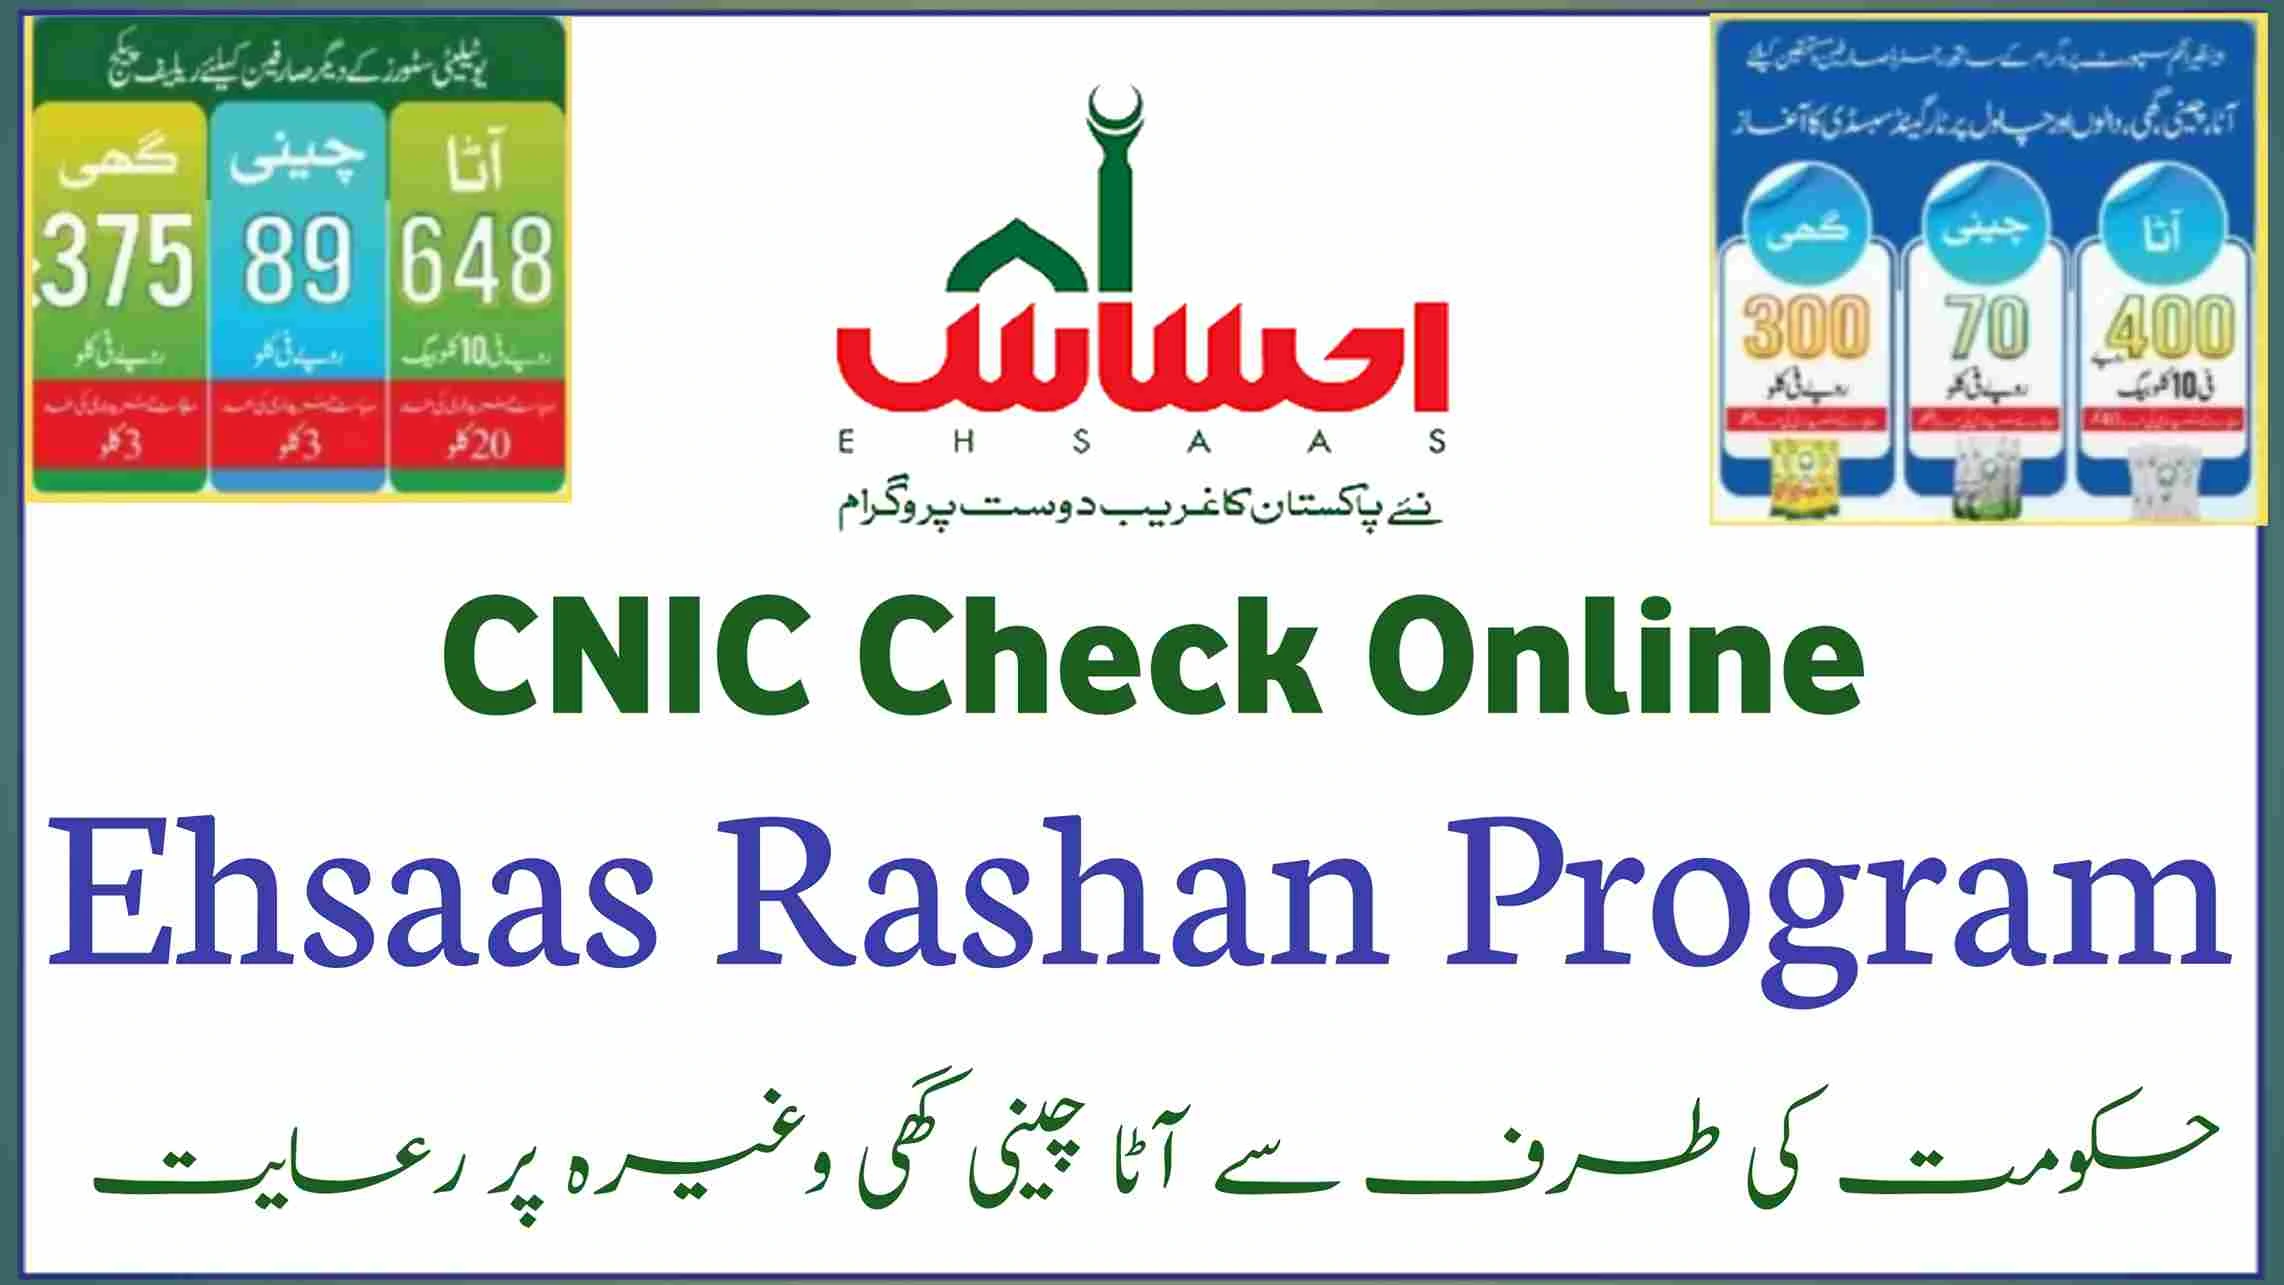 CNIC Check Online for the Ehsaas Rashan Program